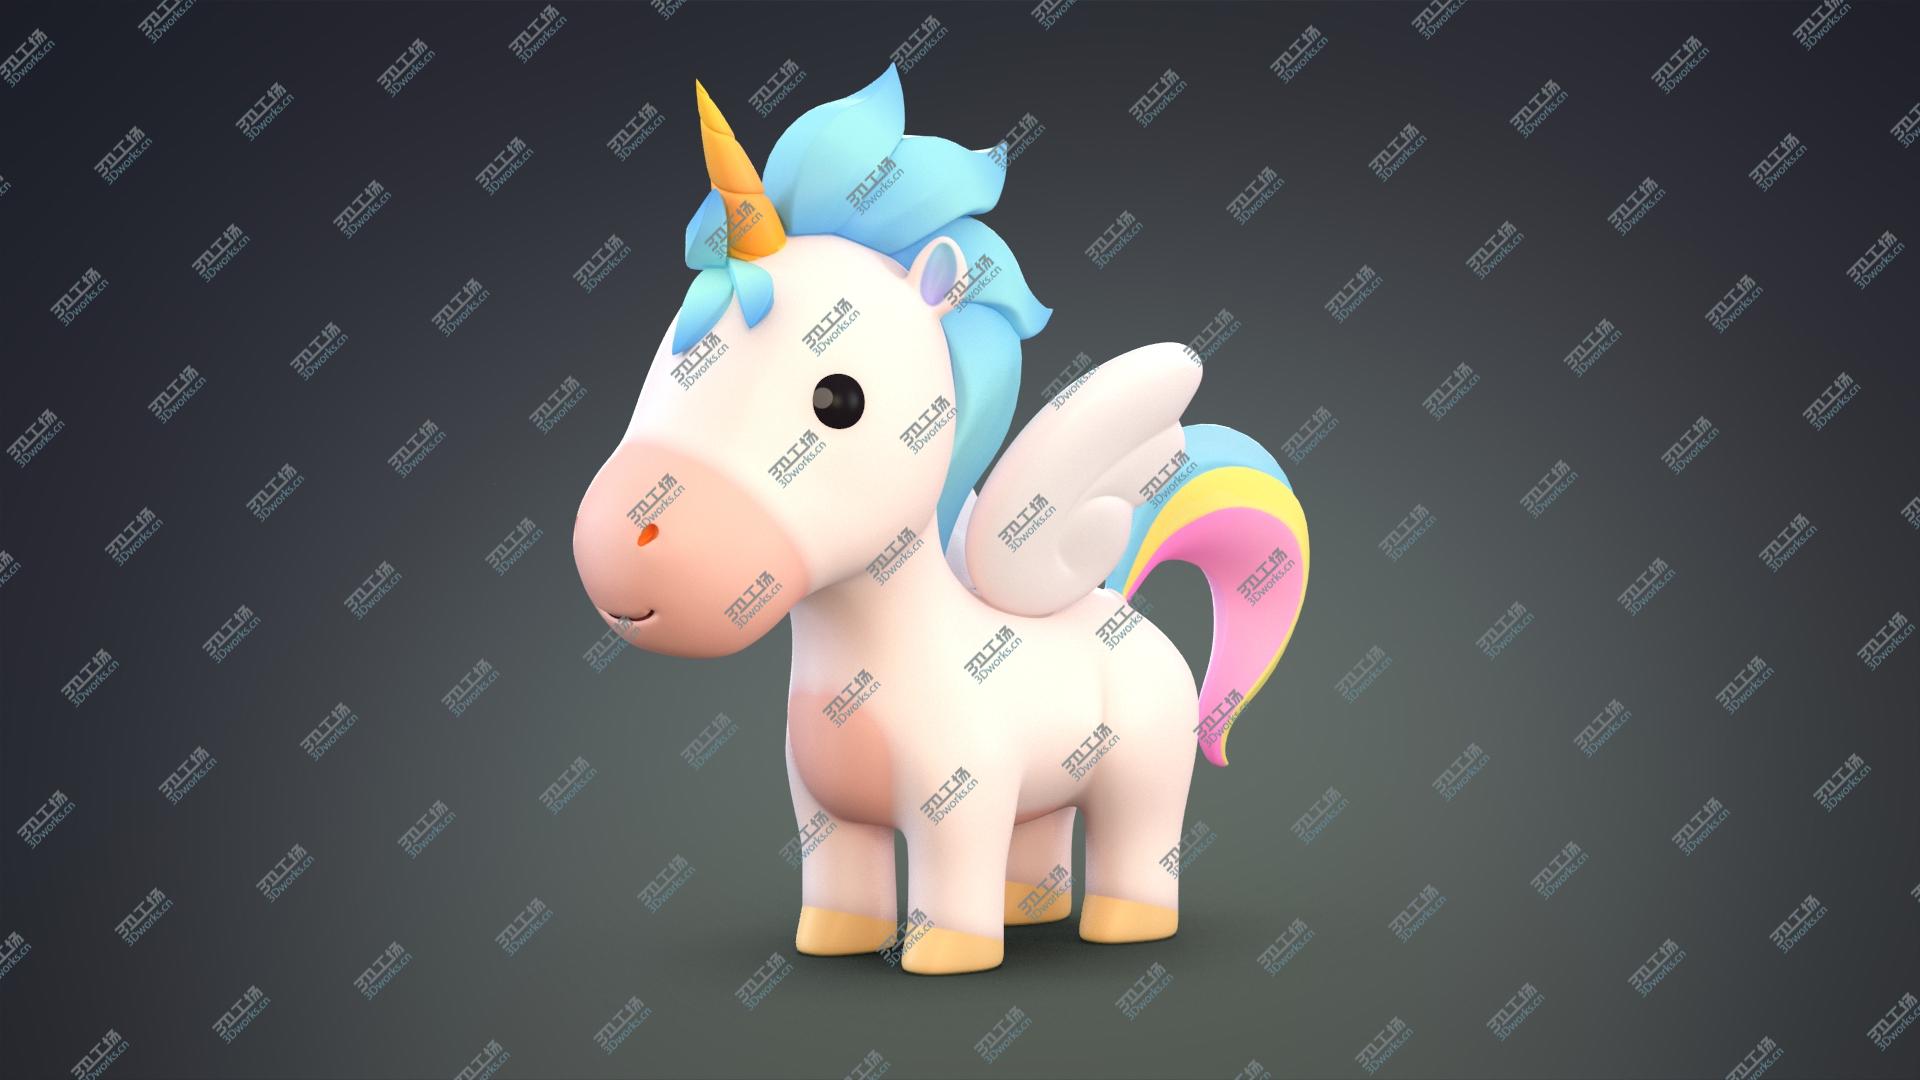 images/goods_img/202104094/Cartoon Pegasus Unicorn 3D model/4.jpg